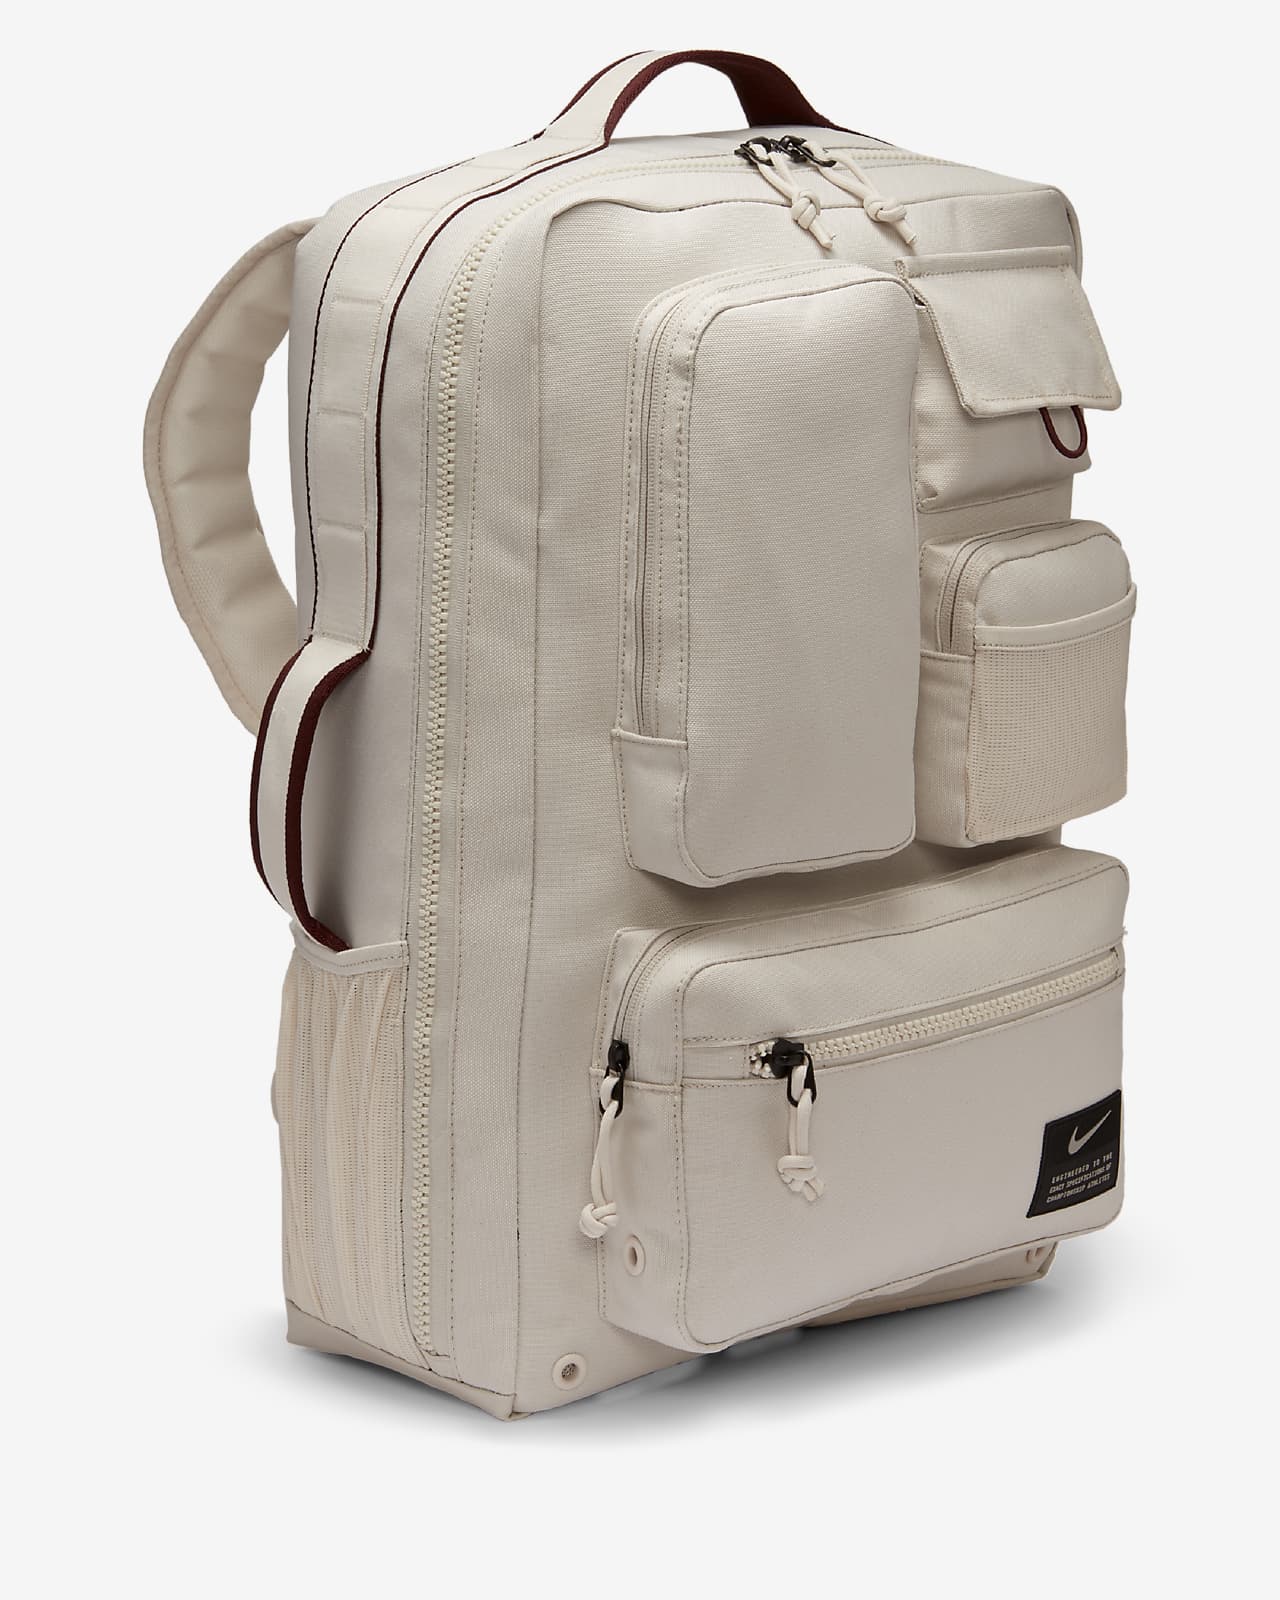 nike men's utility elite backpack